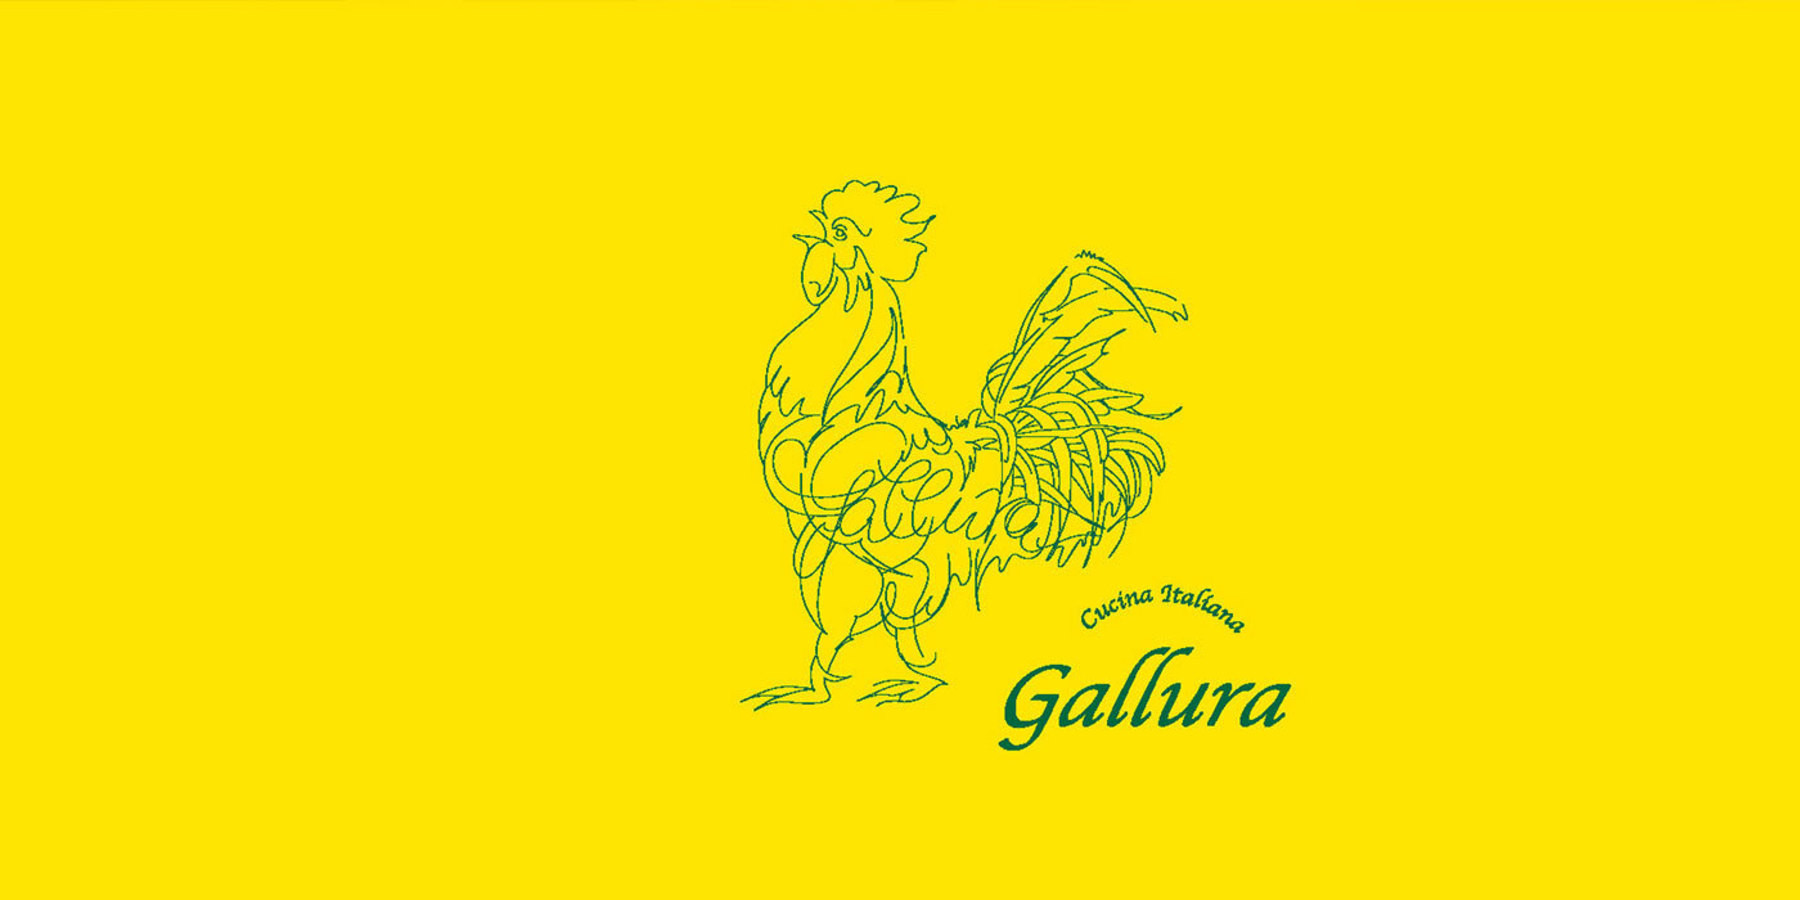 Cucina Italiana Galluraのカバー画像